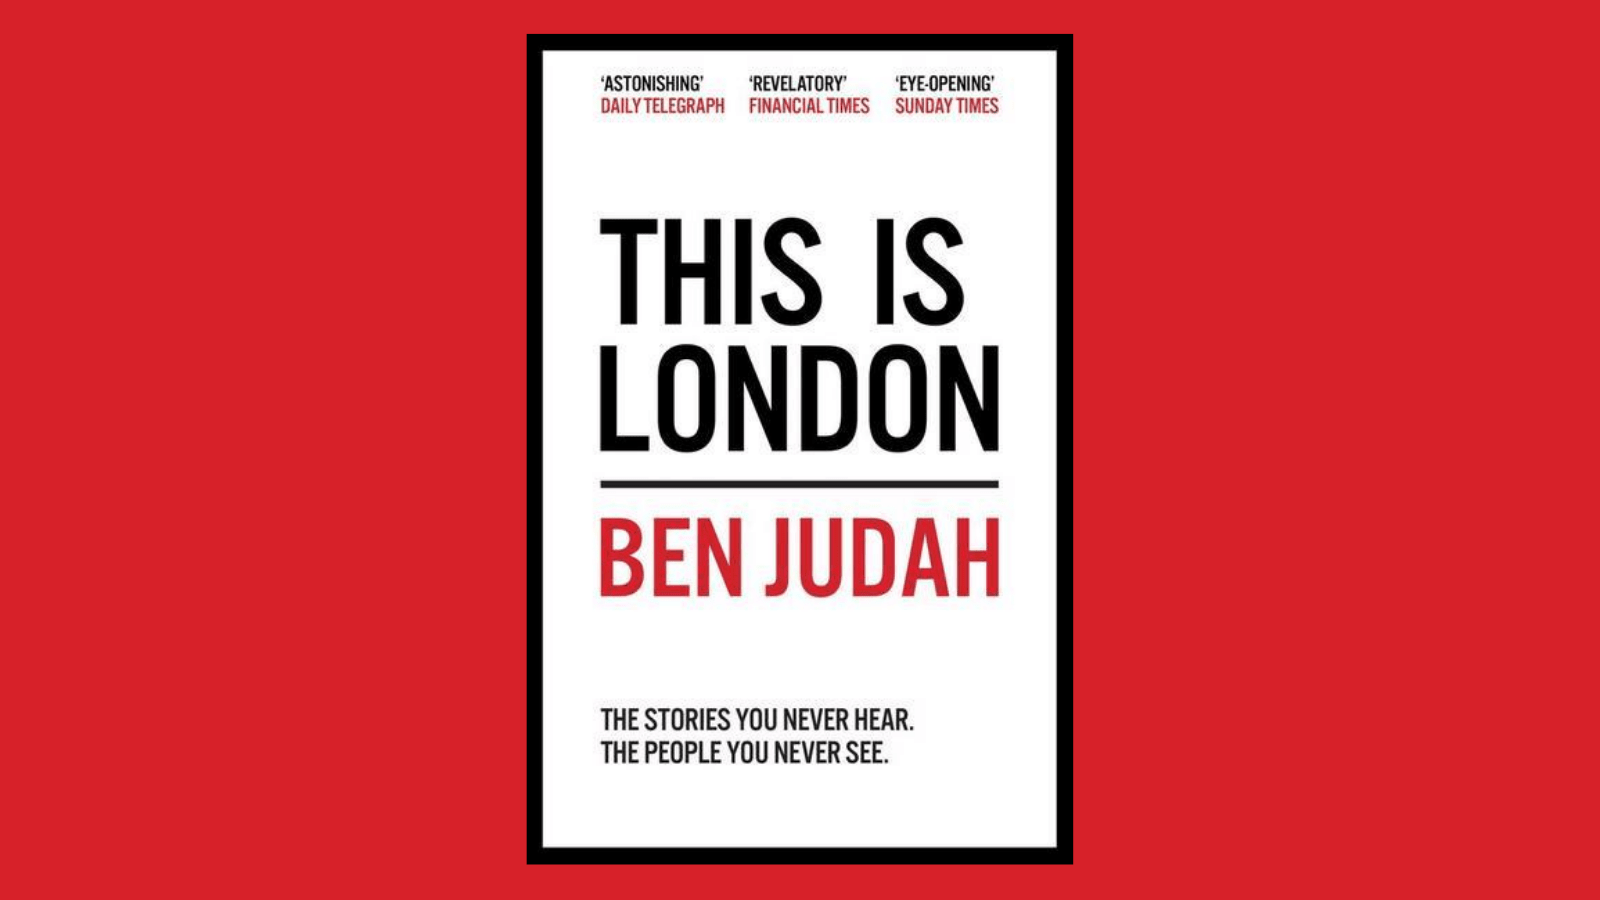 This is London - Ben Judah